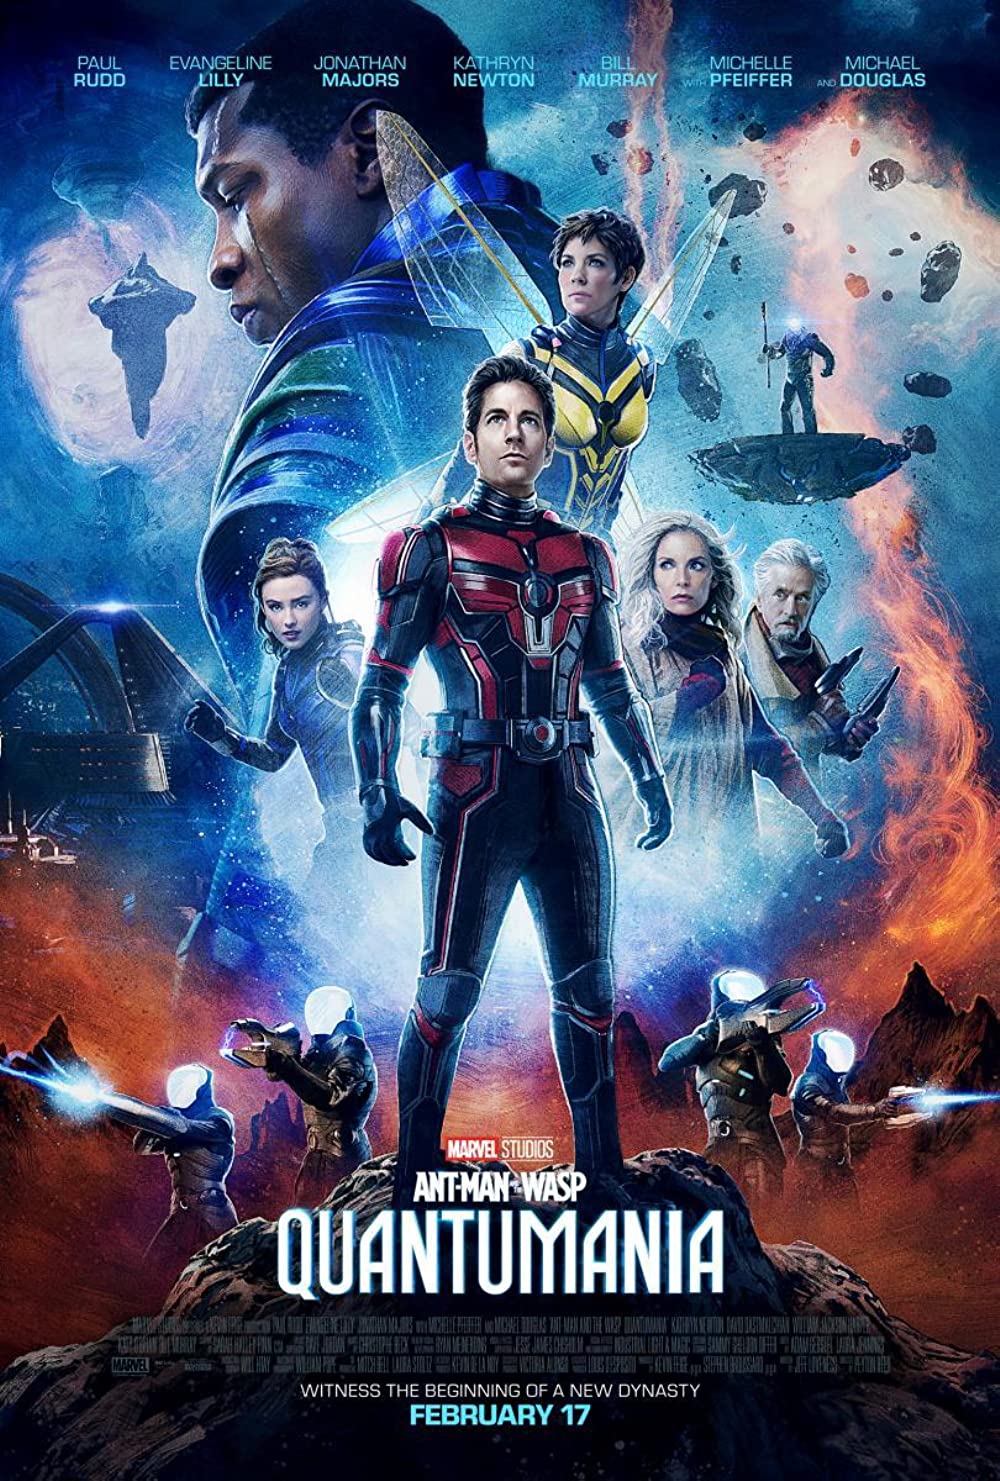 Ant-Man and The Wasp: Quantumania คือภาพยนตร์ซูเปอร์ฮีโร่เรื่องล่าสุดจาก Marvel Studios